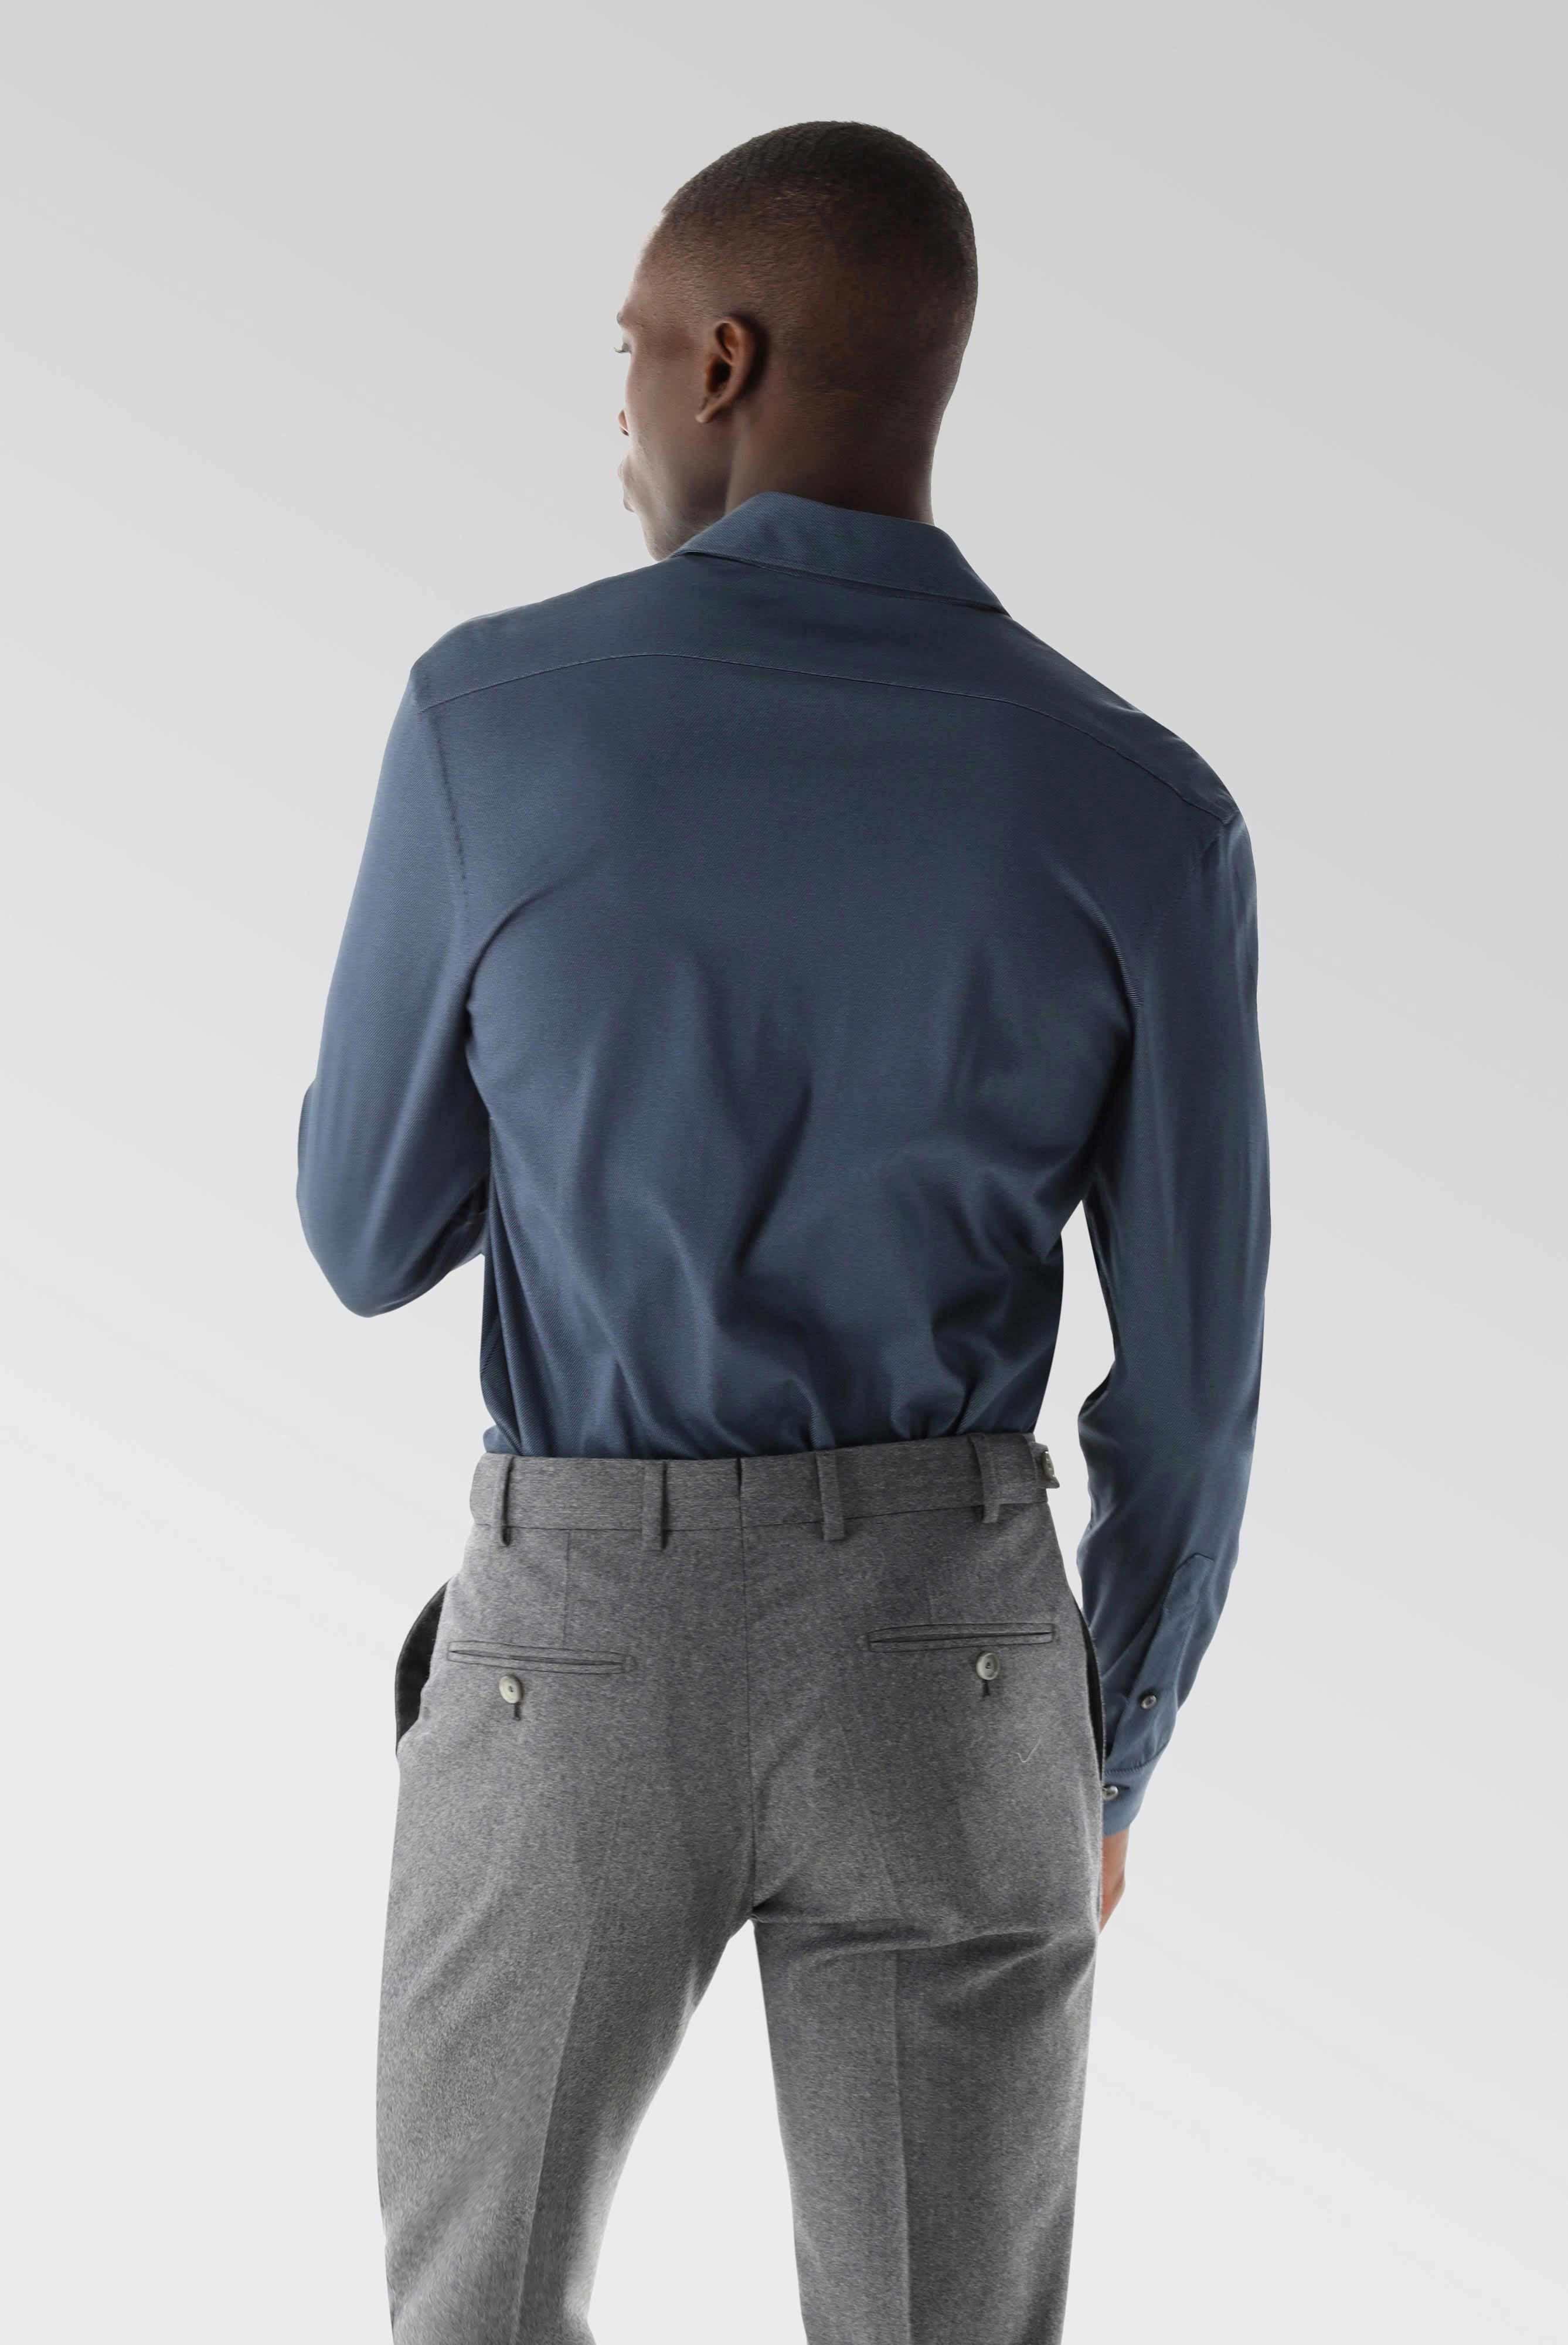 Casual Hemden+Jersey Hemd mit Twill Druck Tailor Fit+20.1683.UC.187749.782.L